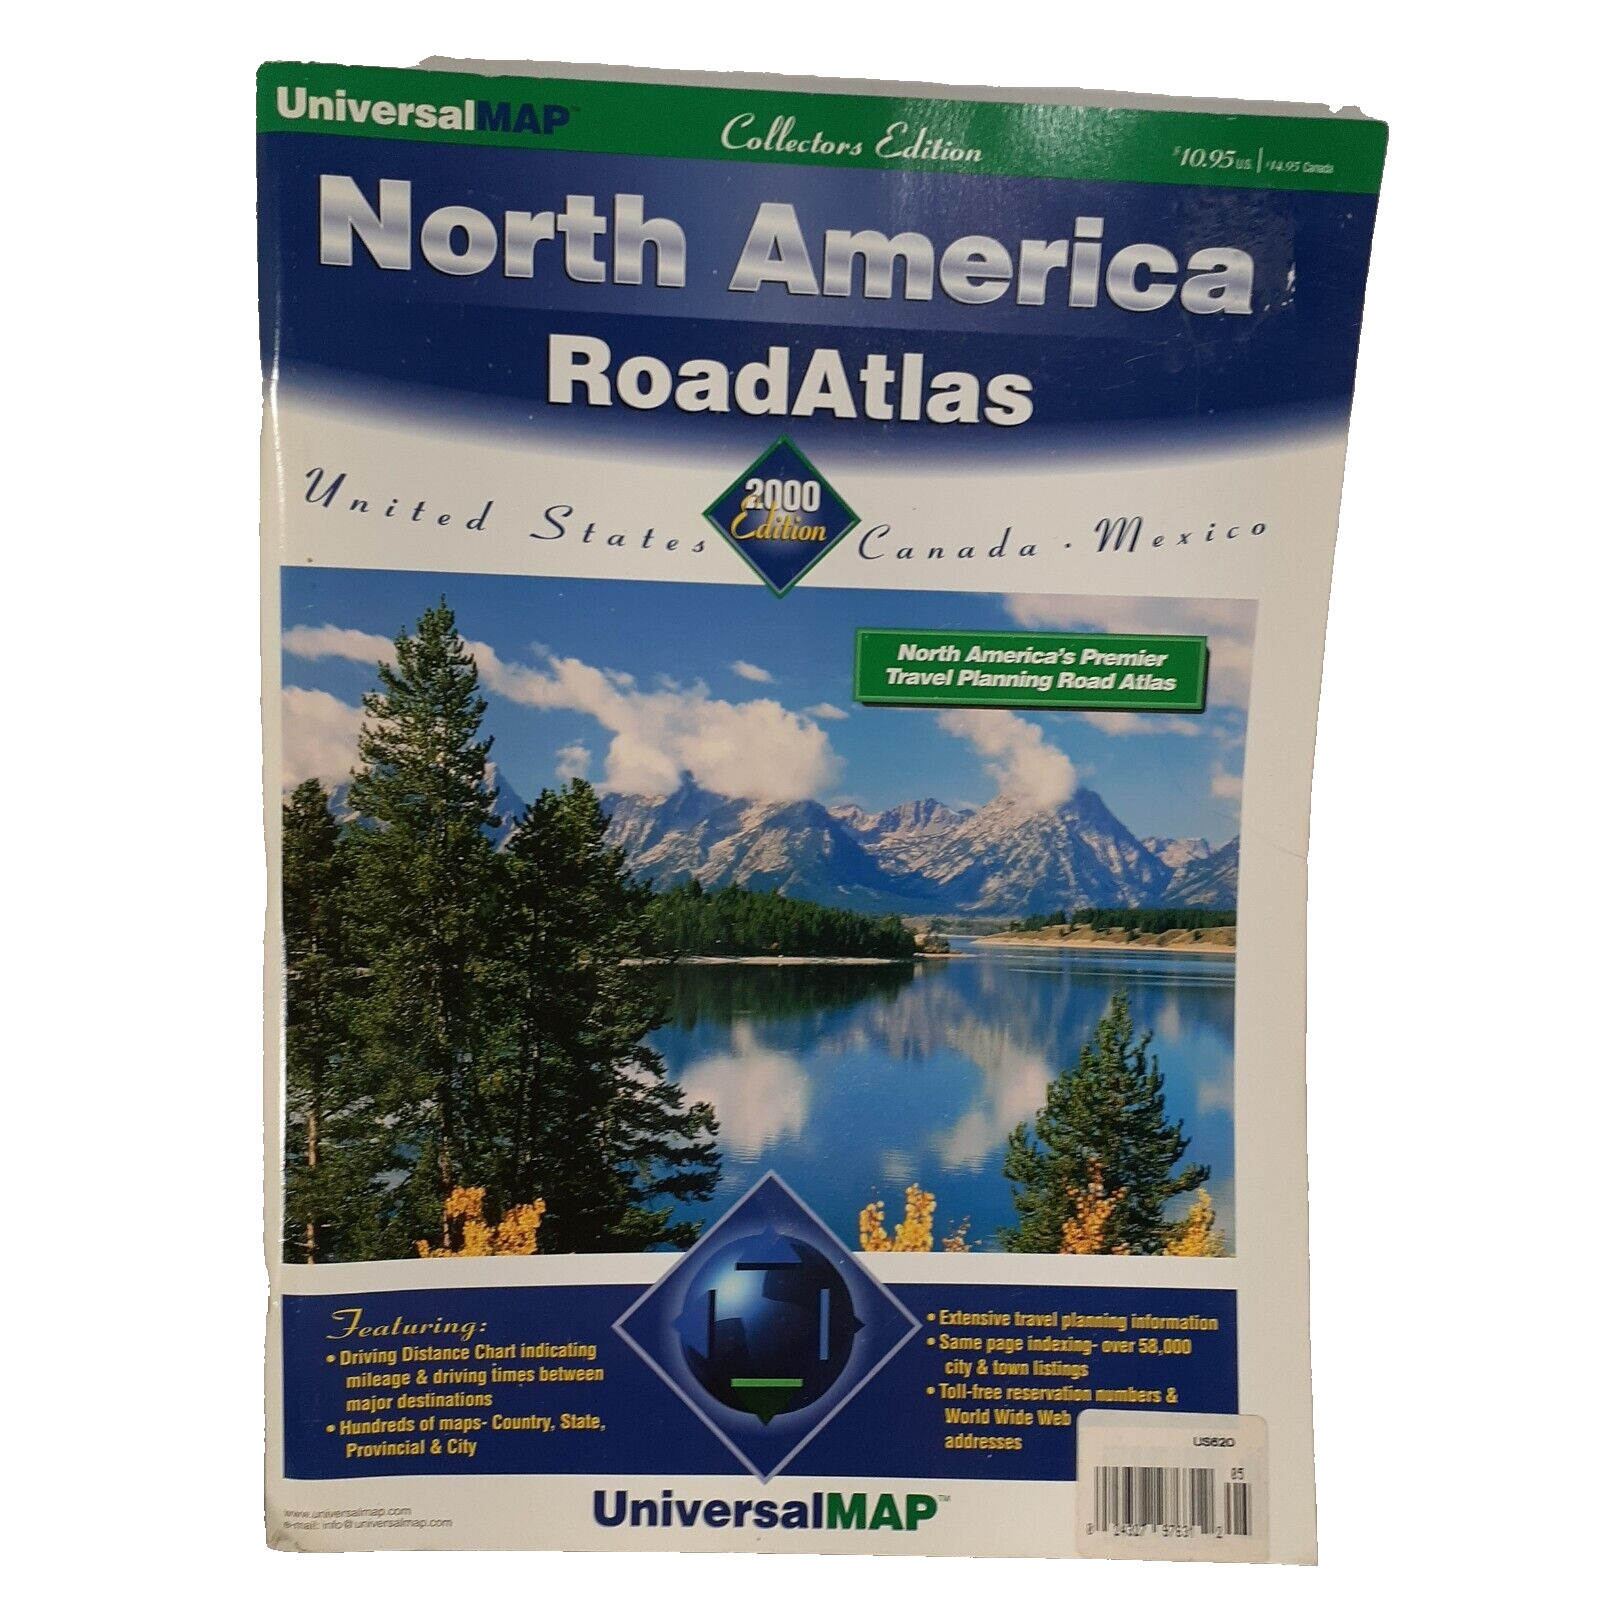 North America Road Atlas USA Canada Mexico 2000 Edition Universal Map Collectors